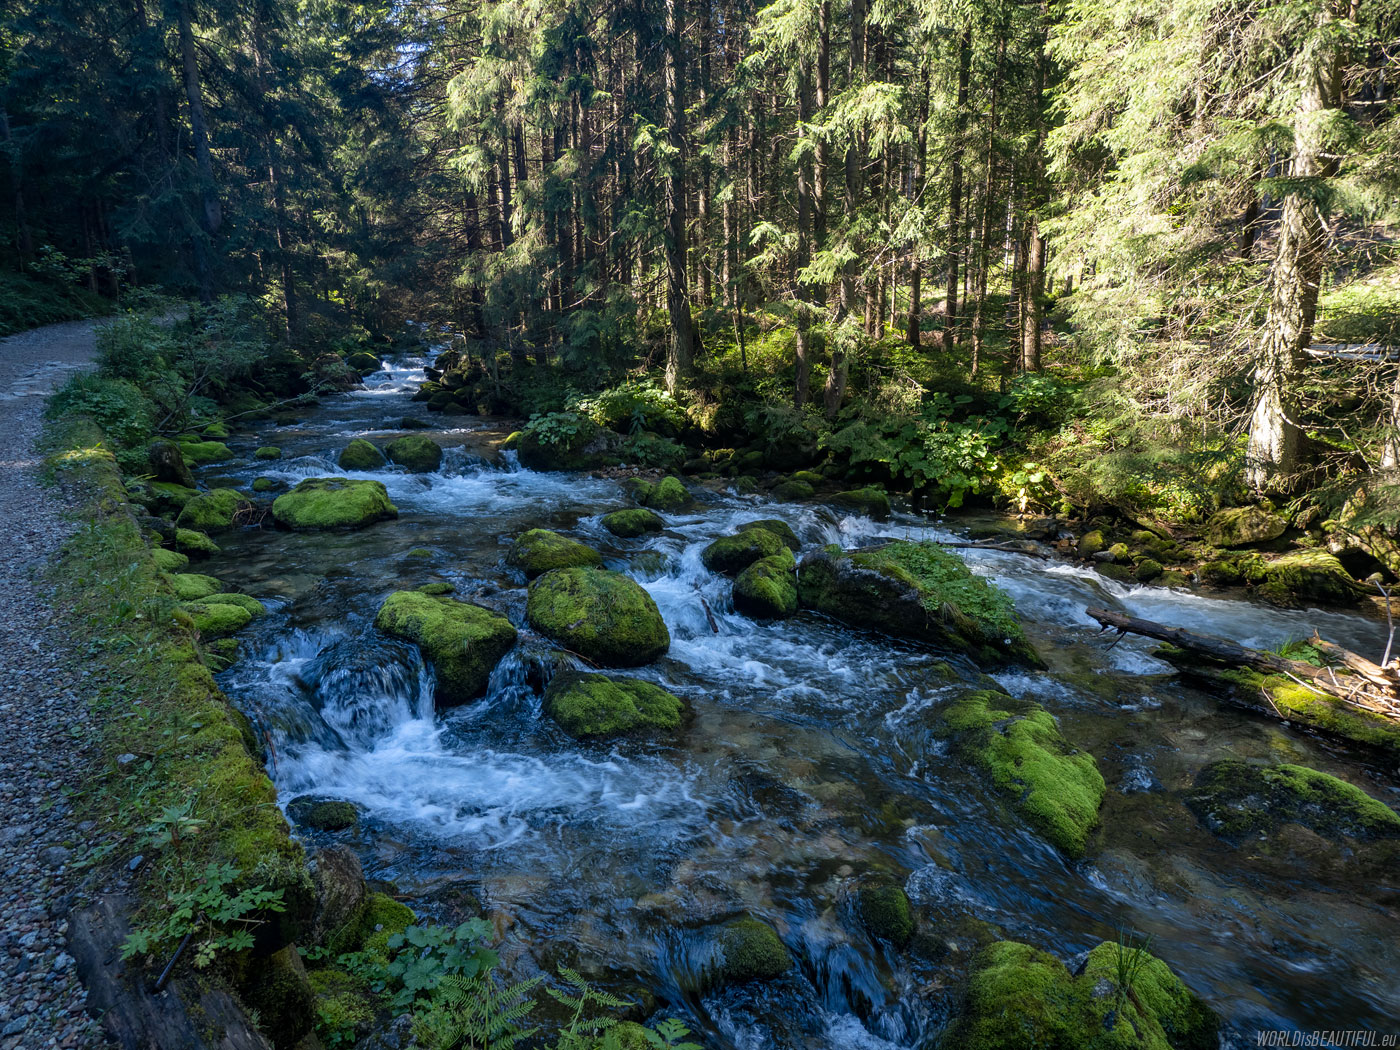 Bystra stream in the Tatras